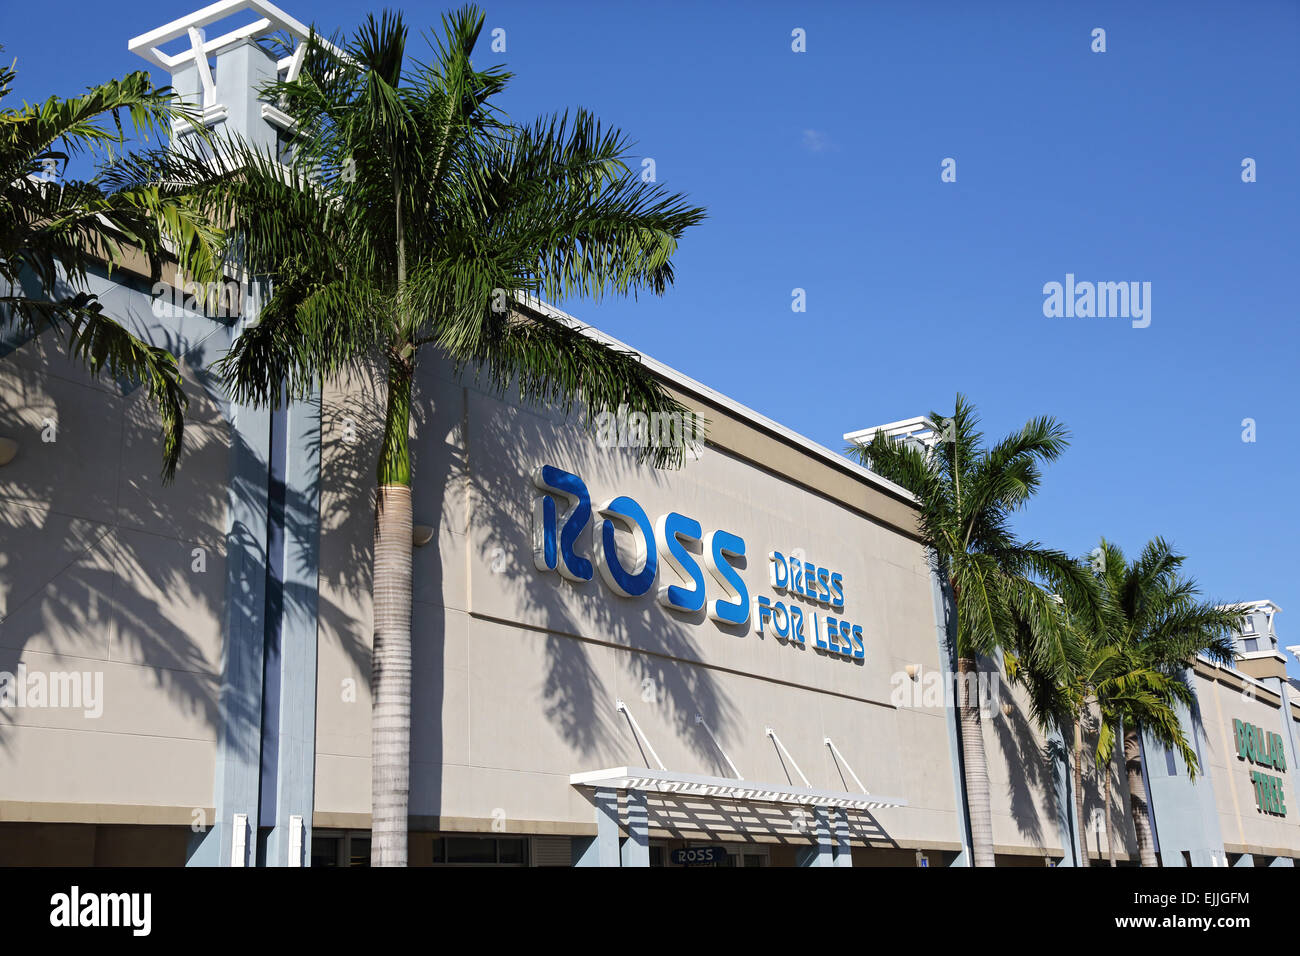 Ross Dress for Less tienda sign & tienda en Fort Lauderdale, Florida